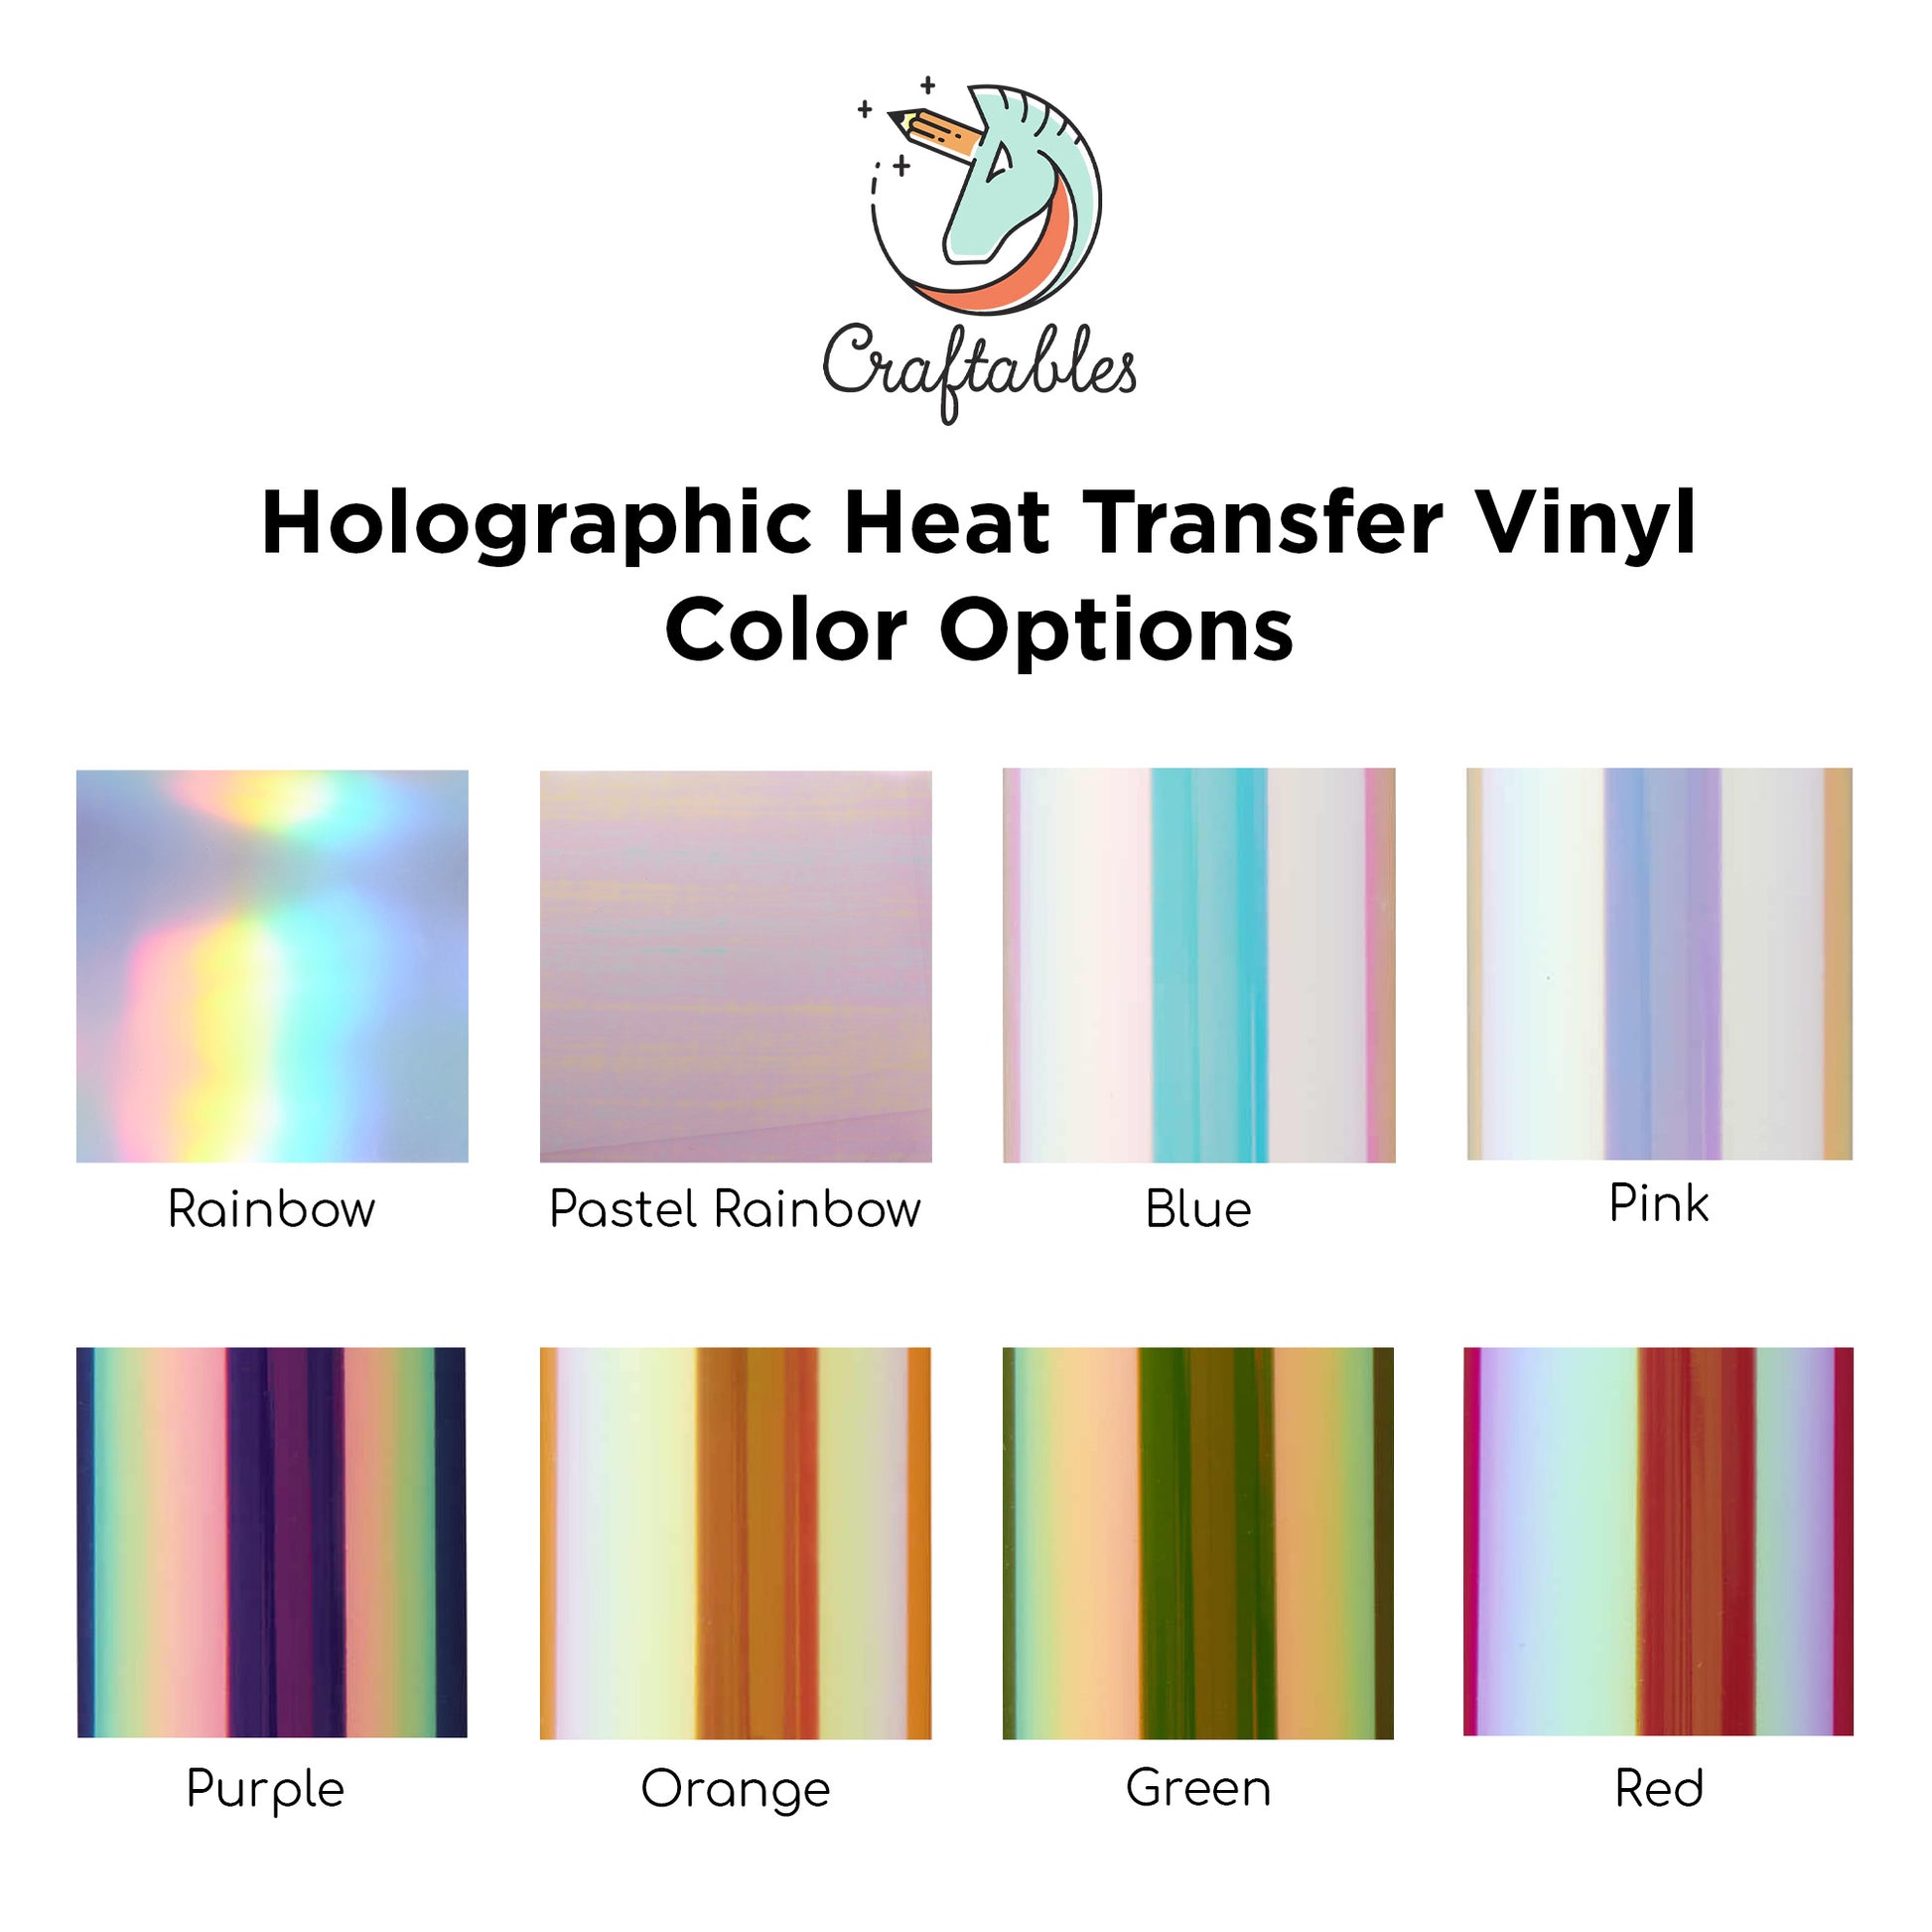 Red Glitter Heat Transfer Vinyl Sheets By Craftables